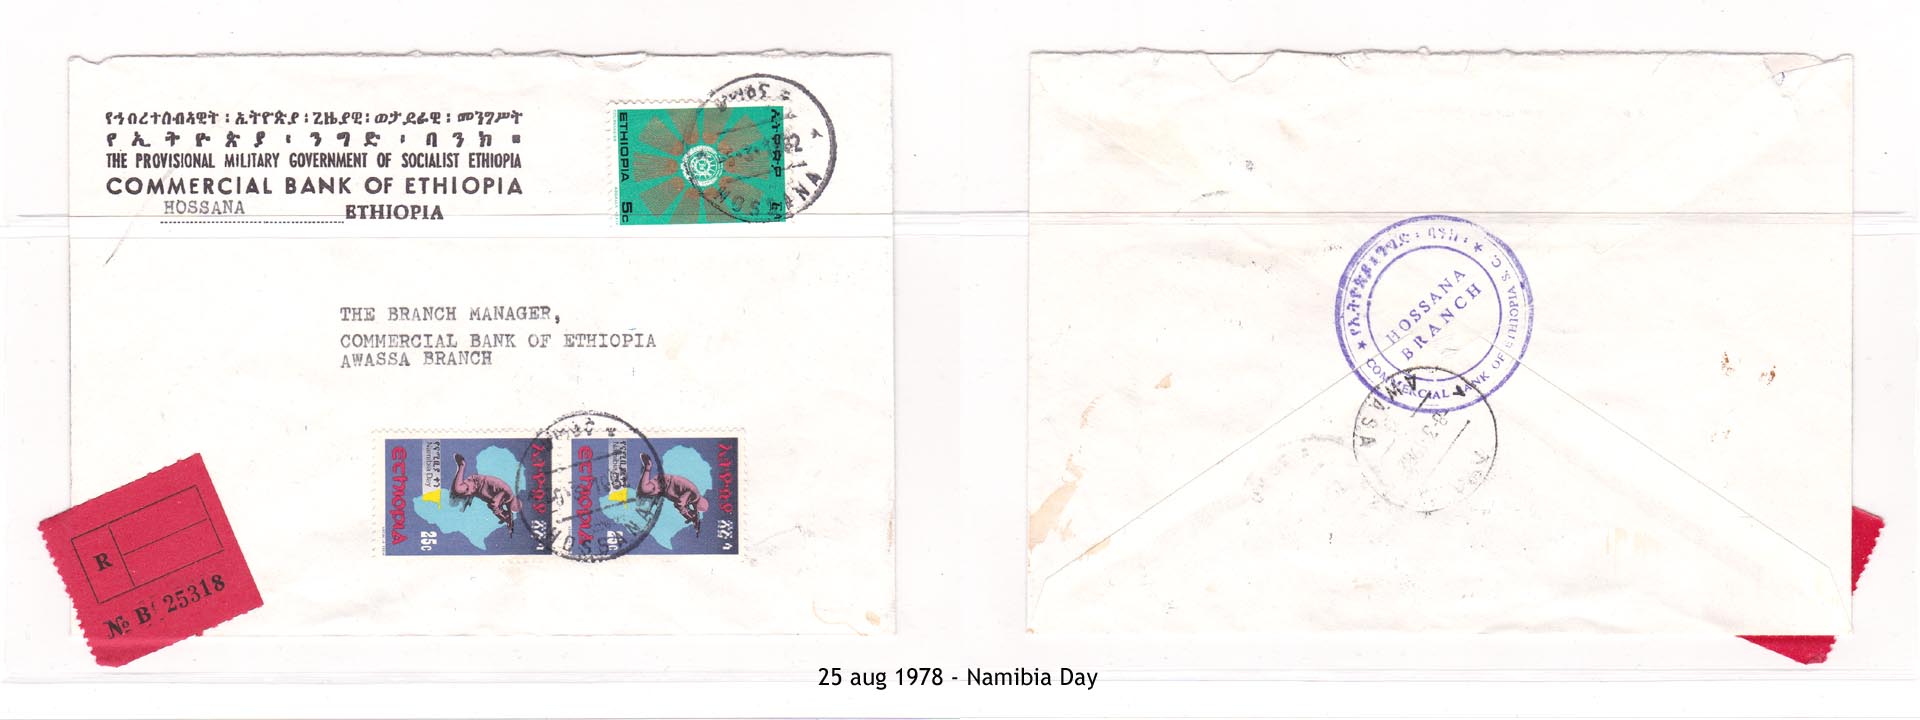 19780825 - Namibia Day z